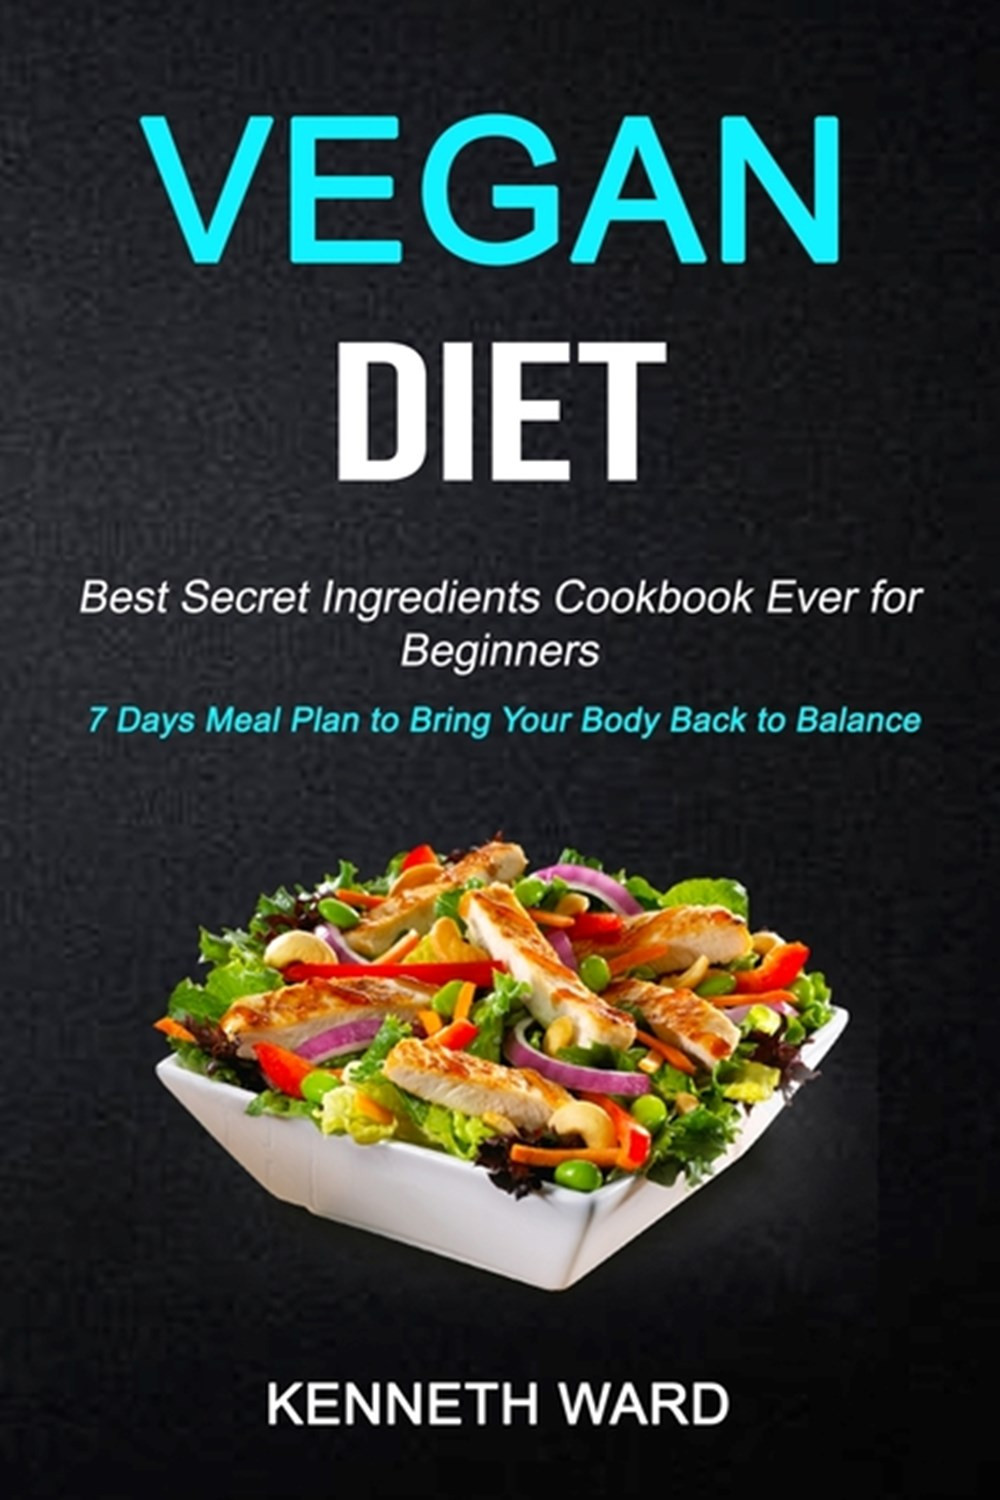 Best Vegan Diet Plan
 Vegan Diet Best Secret Ingre nts Cookbook Ever for